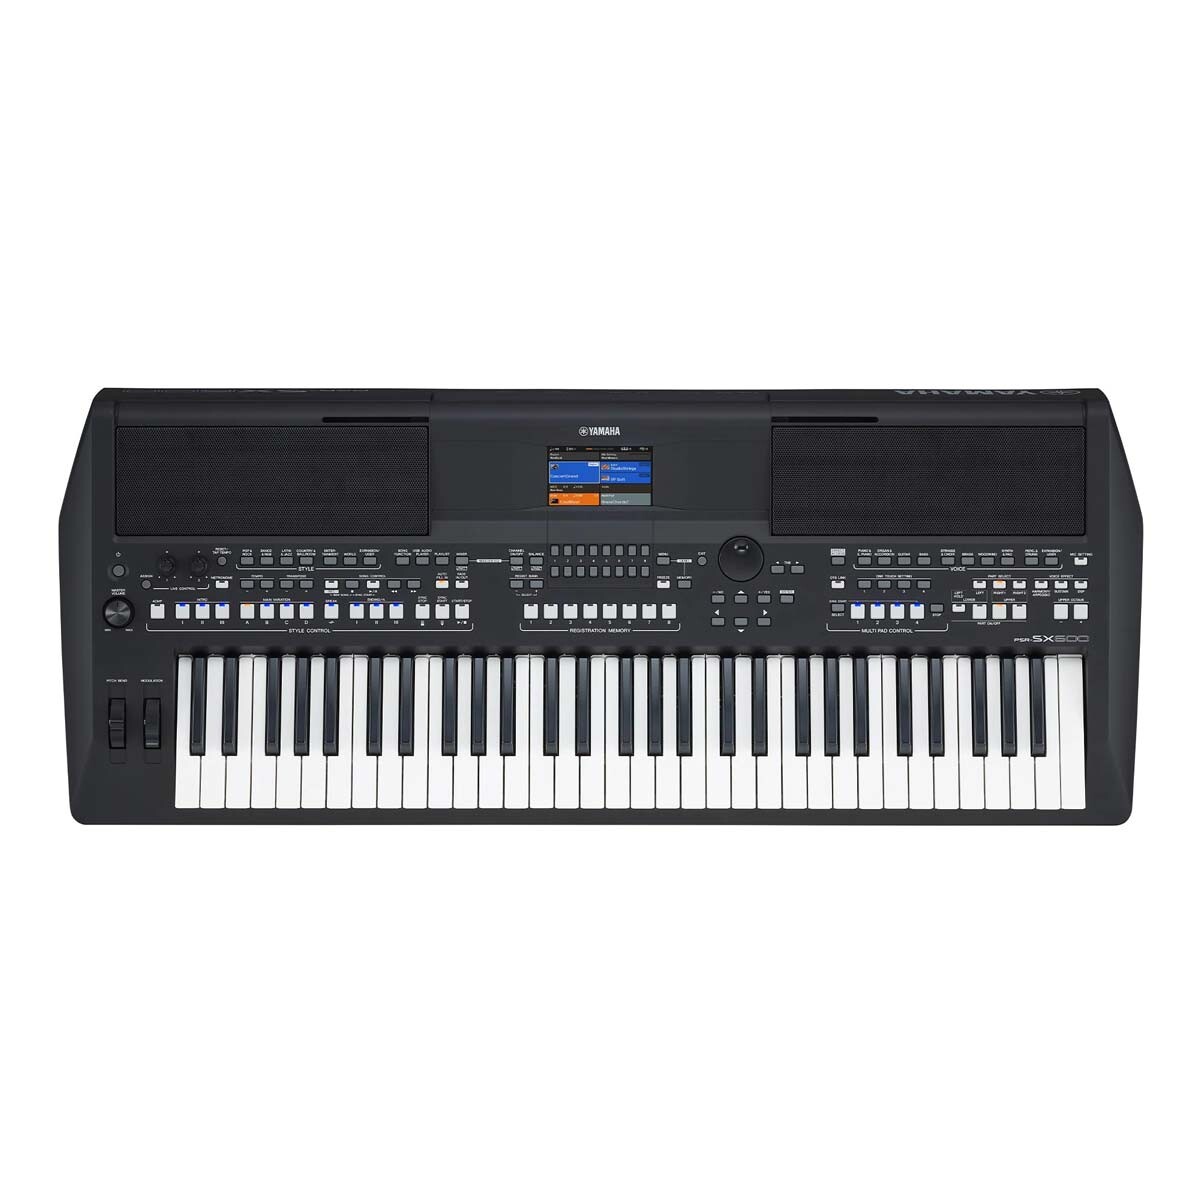 Organo Yamaha Psrsx600 